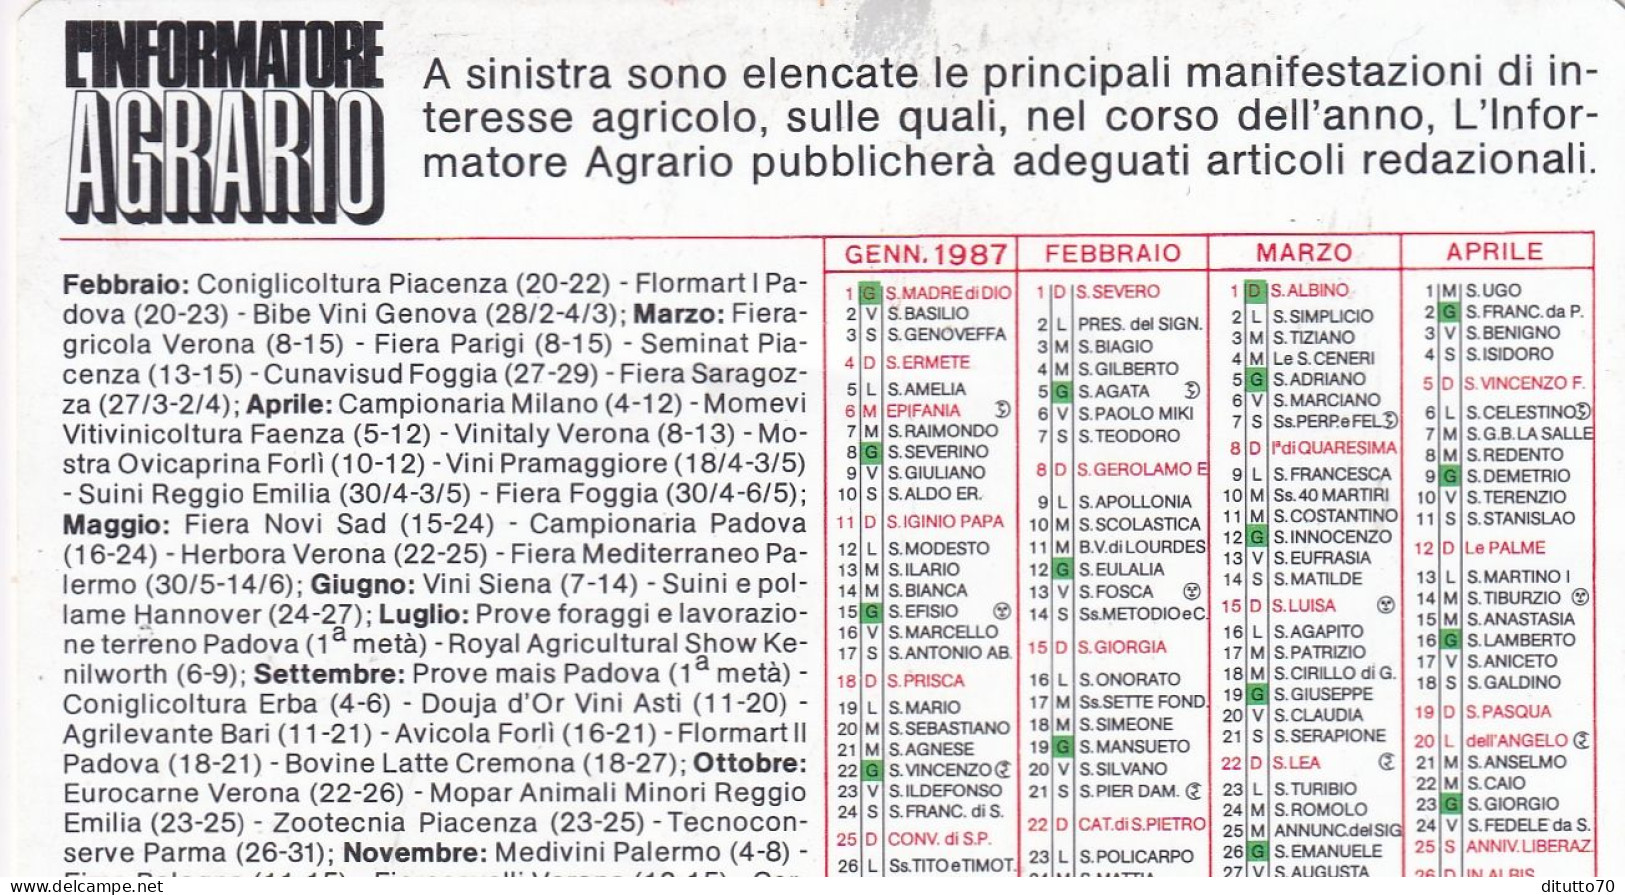 Calendarietto - L'informatore Agrario - Anno 1987 - Tamaño Pequeño : 1981-90